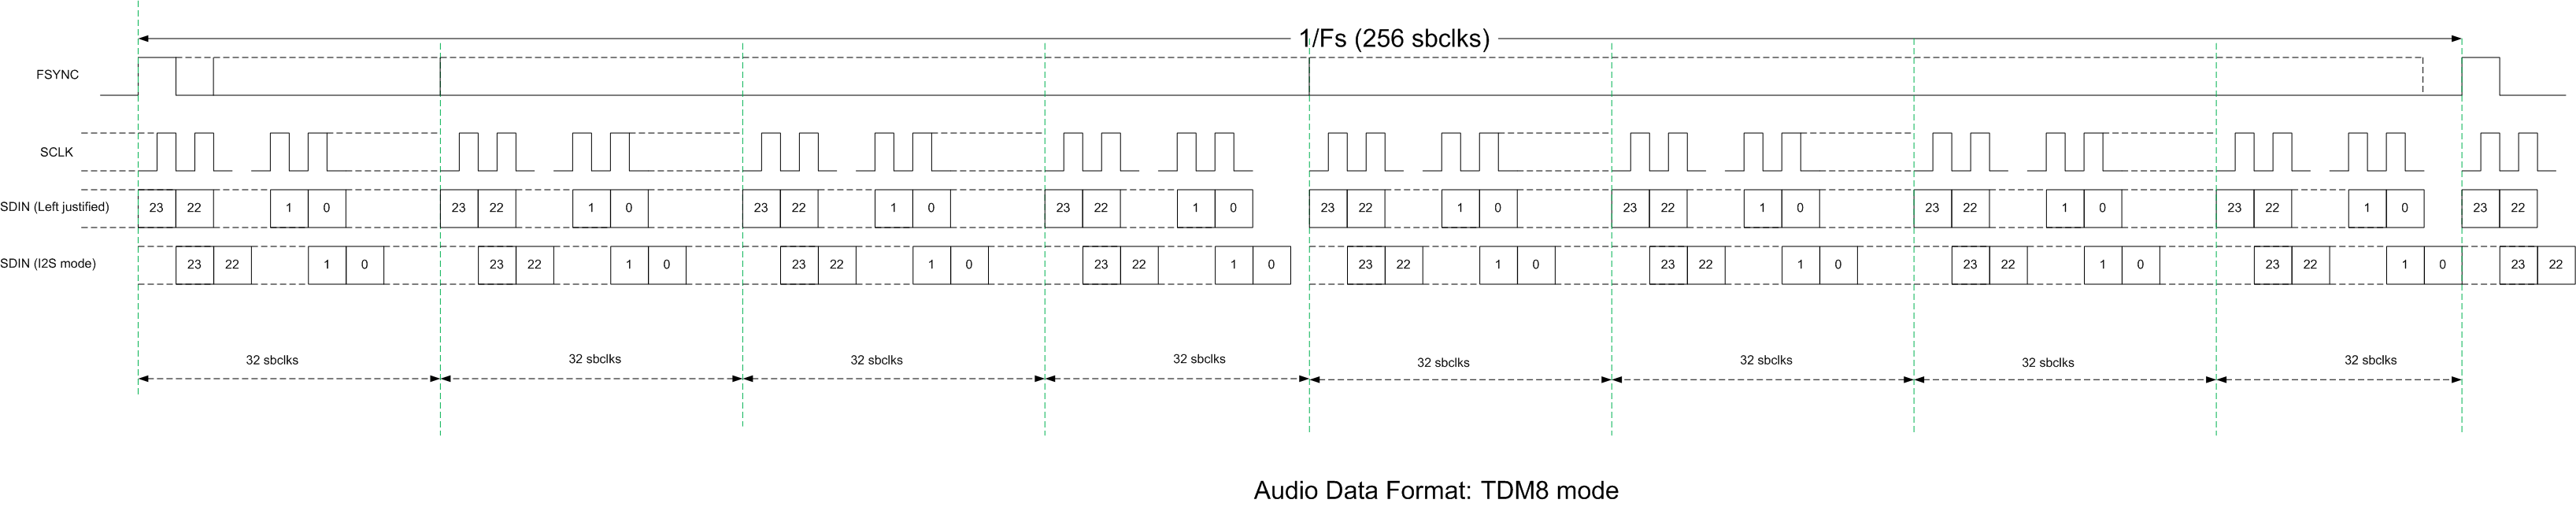 TAS6424L-Q1 aud_data_format_TDMA_slos870.gif